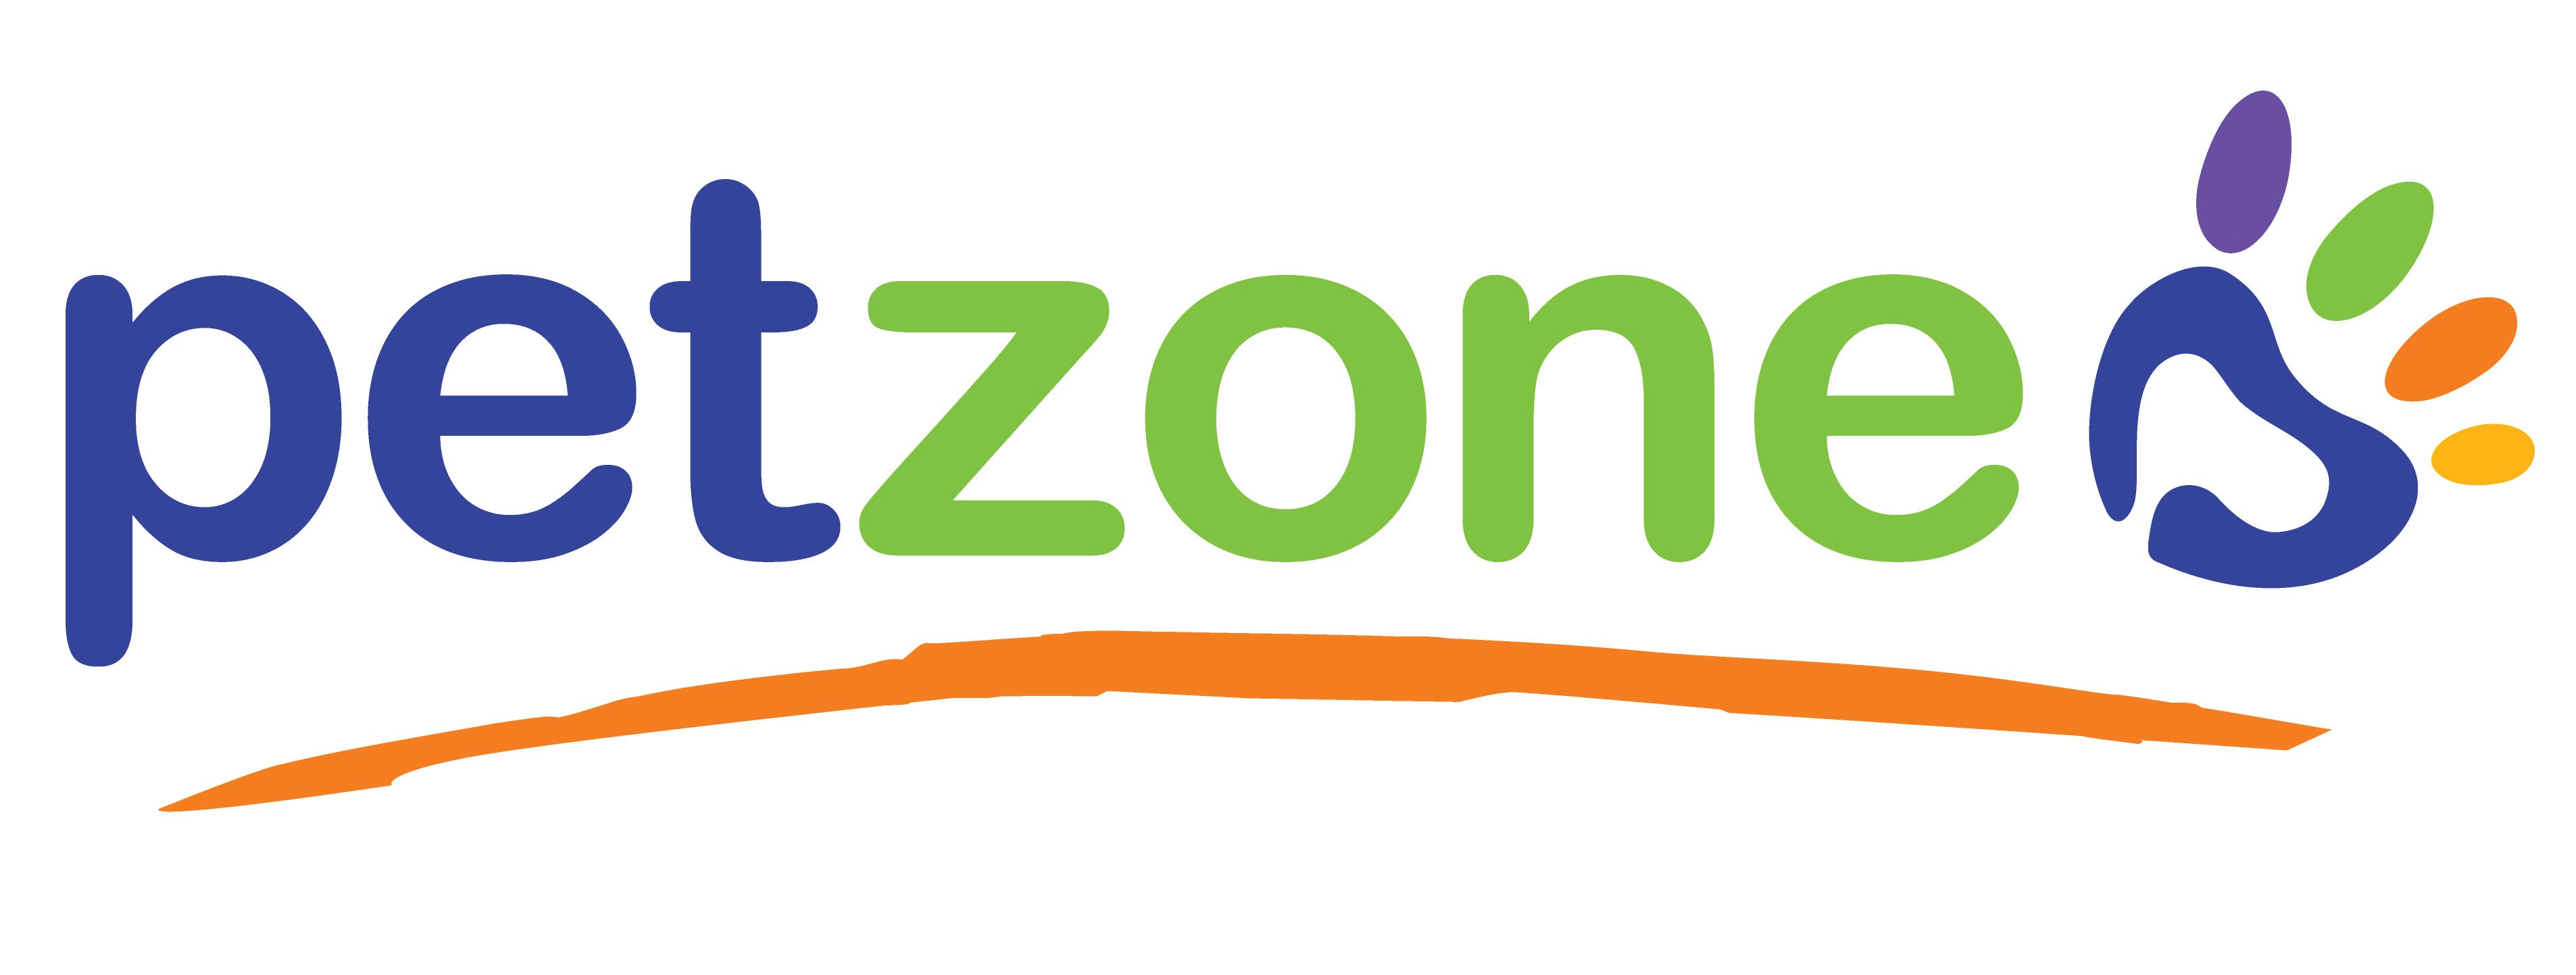 petzone logo